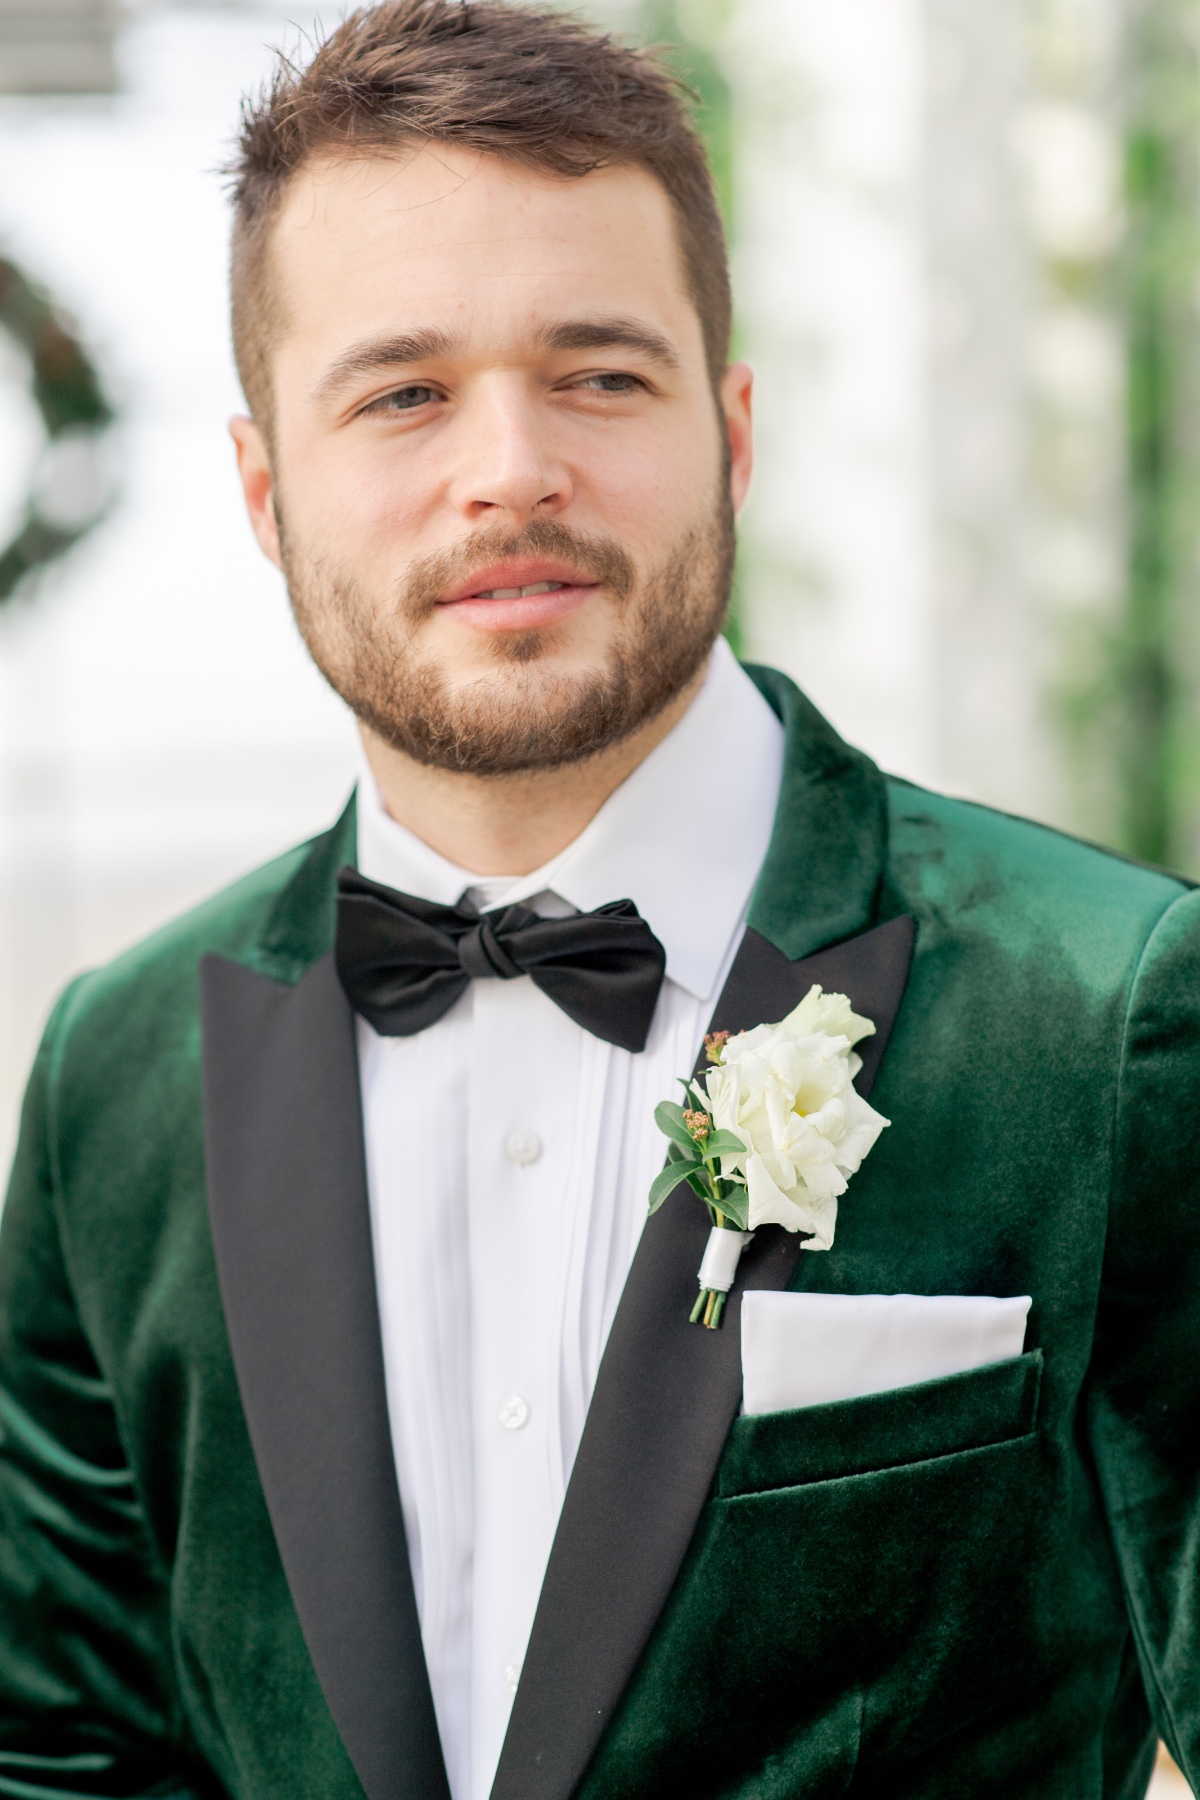 Green velvet suit with bowtie